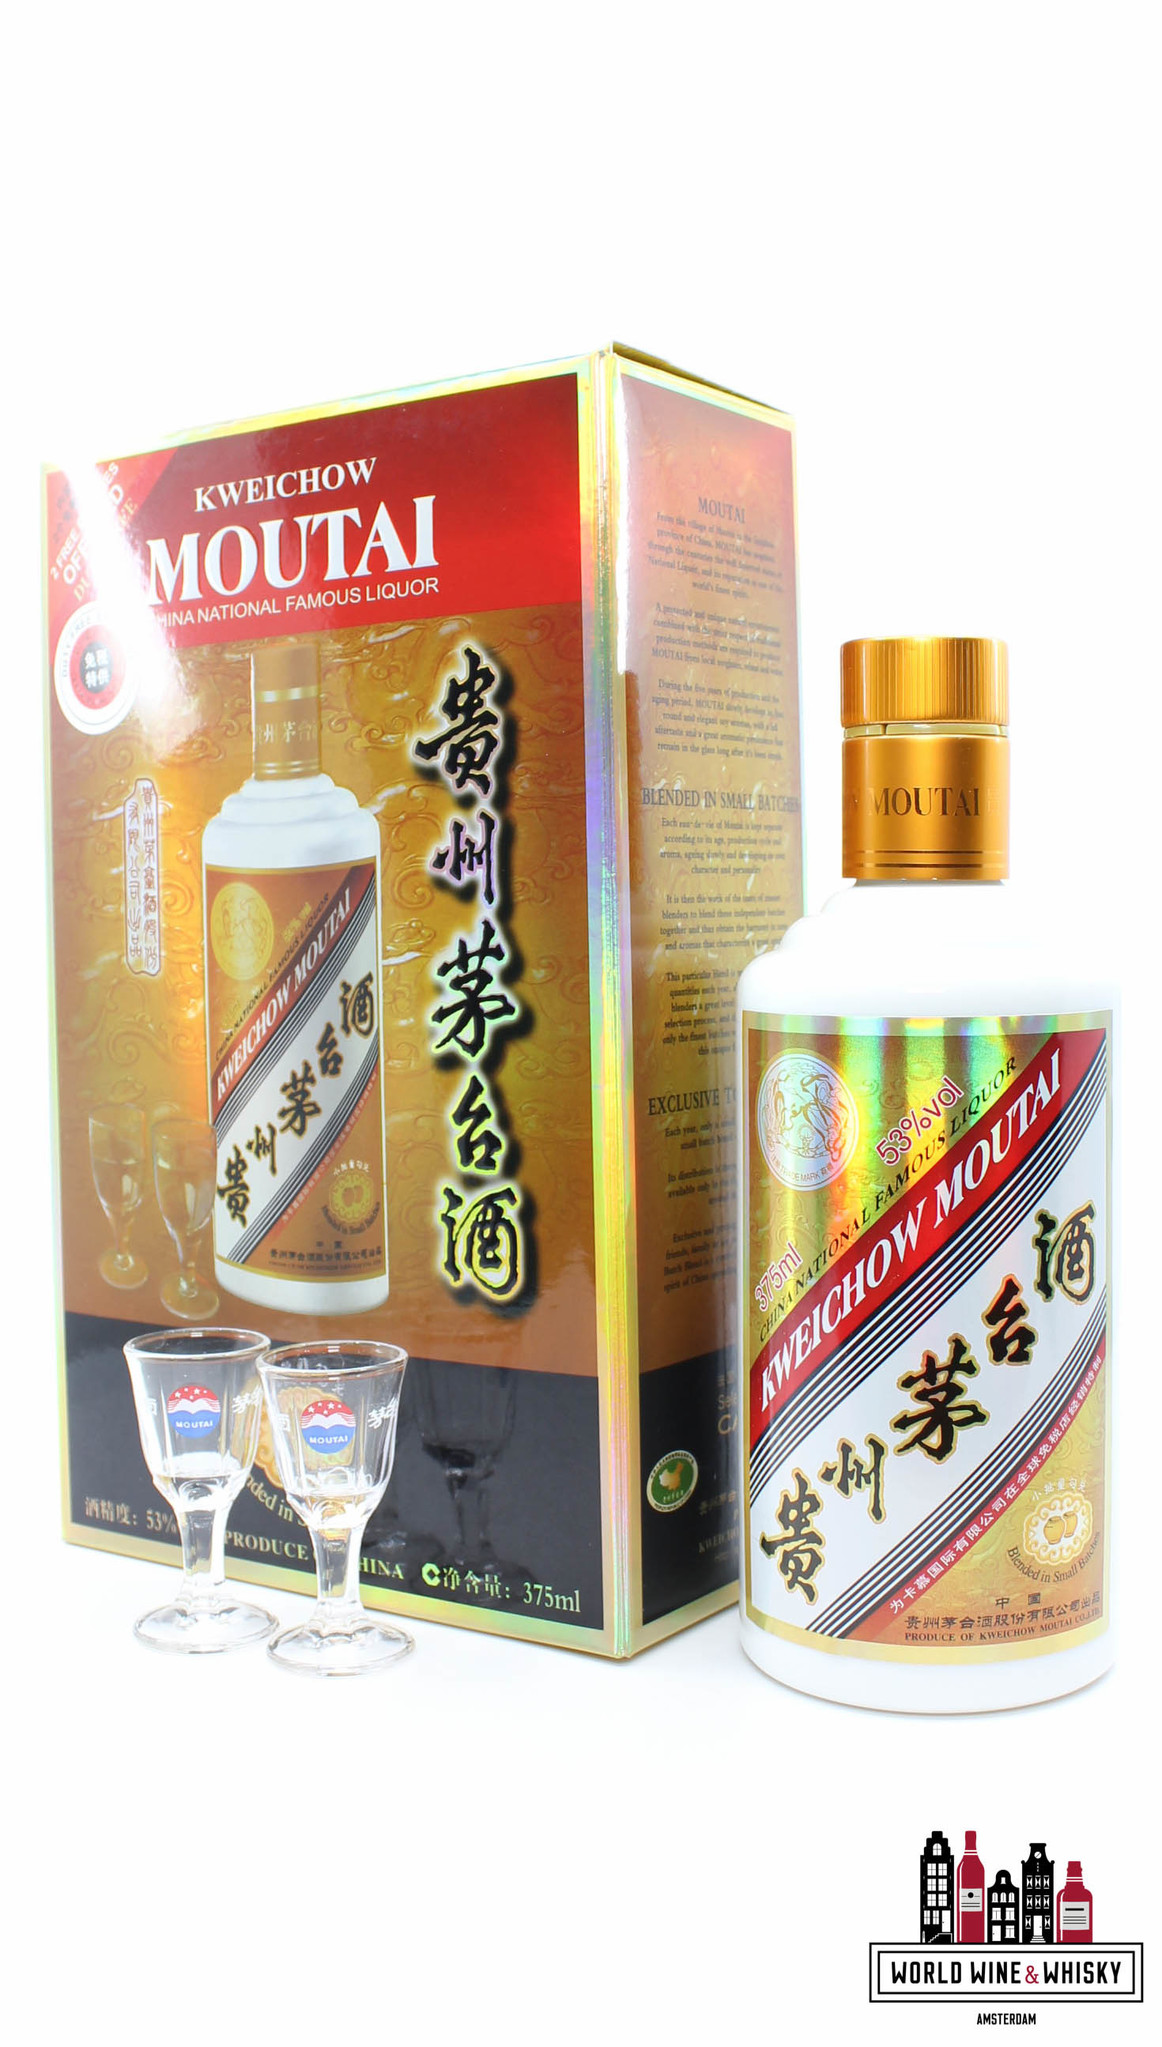 Kweichow Moutai Kweichow Moutai Small Batch - Duty Free Exclusive 53% 375ml (National Famous Liquor of China)